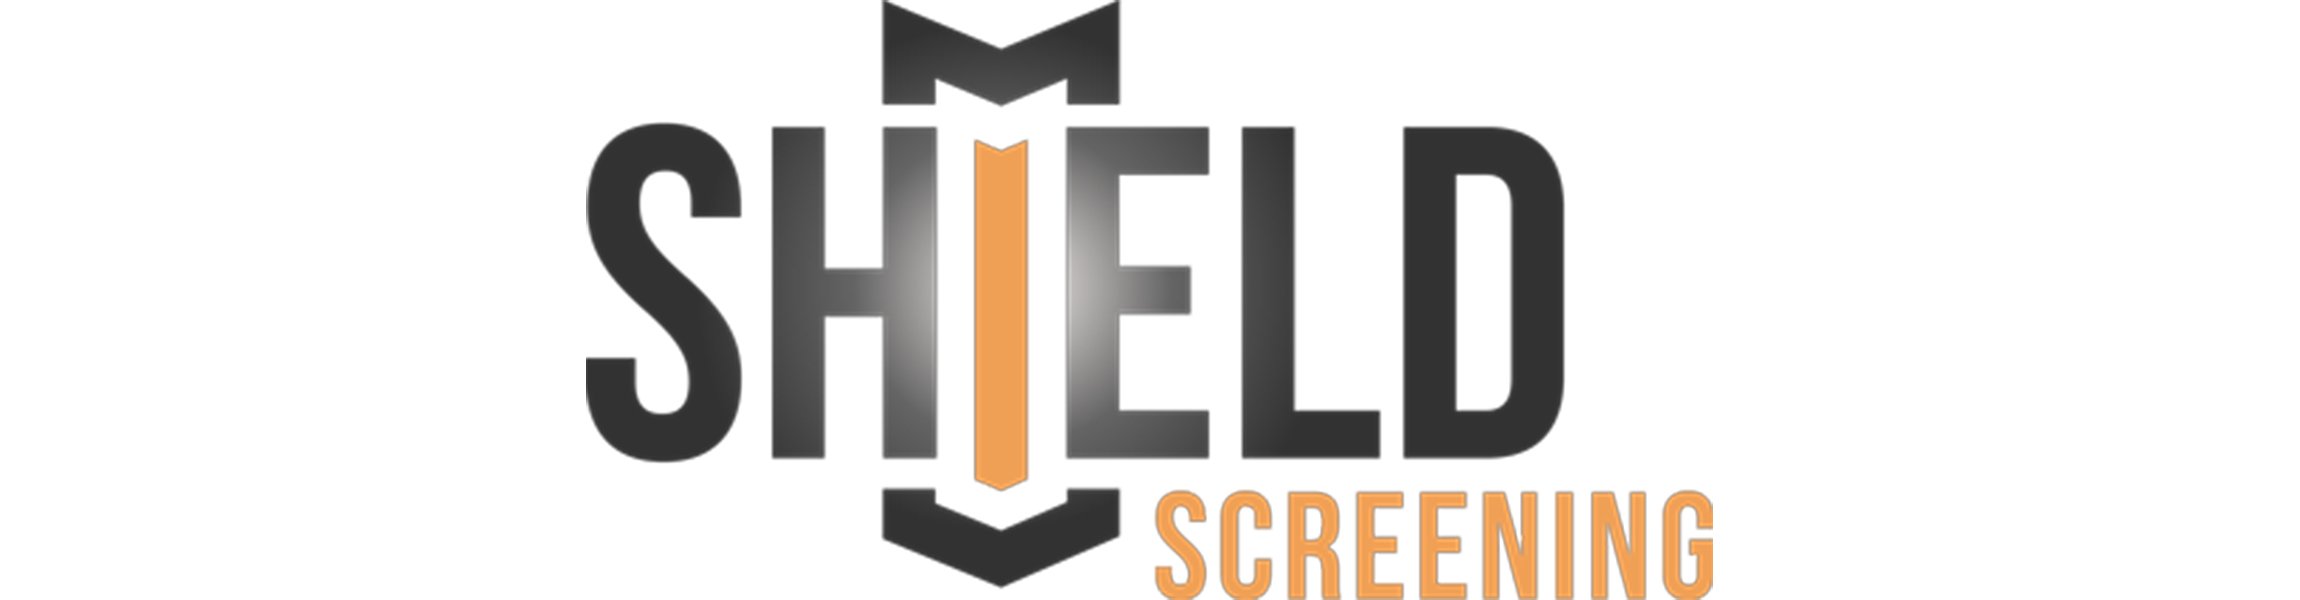 shield-screening